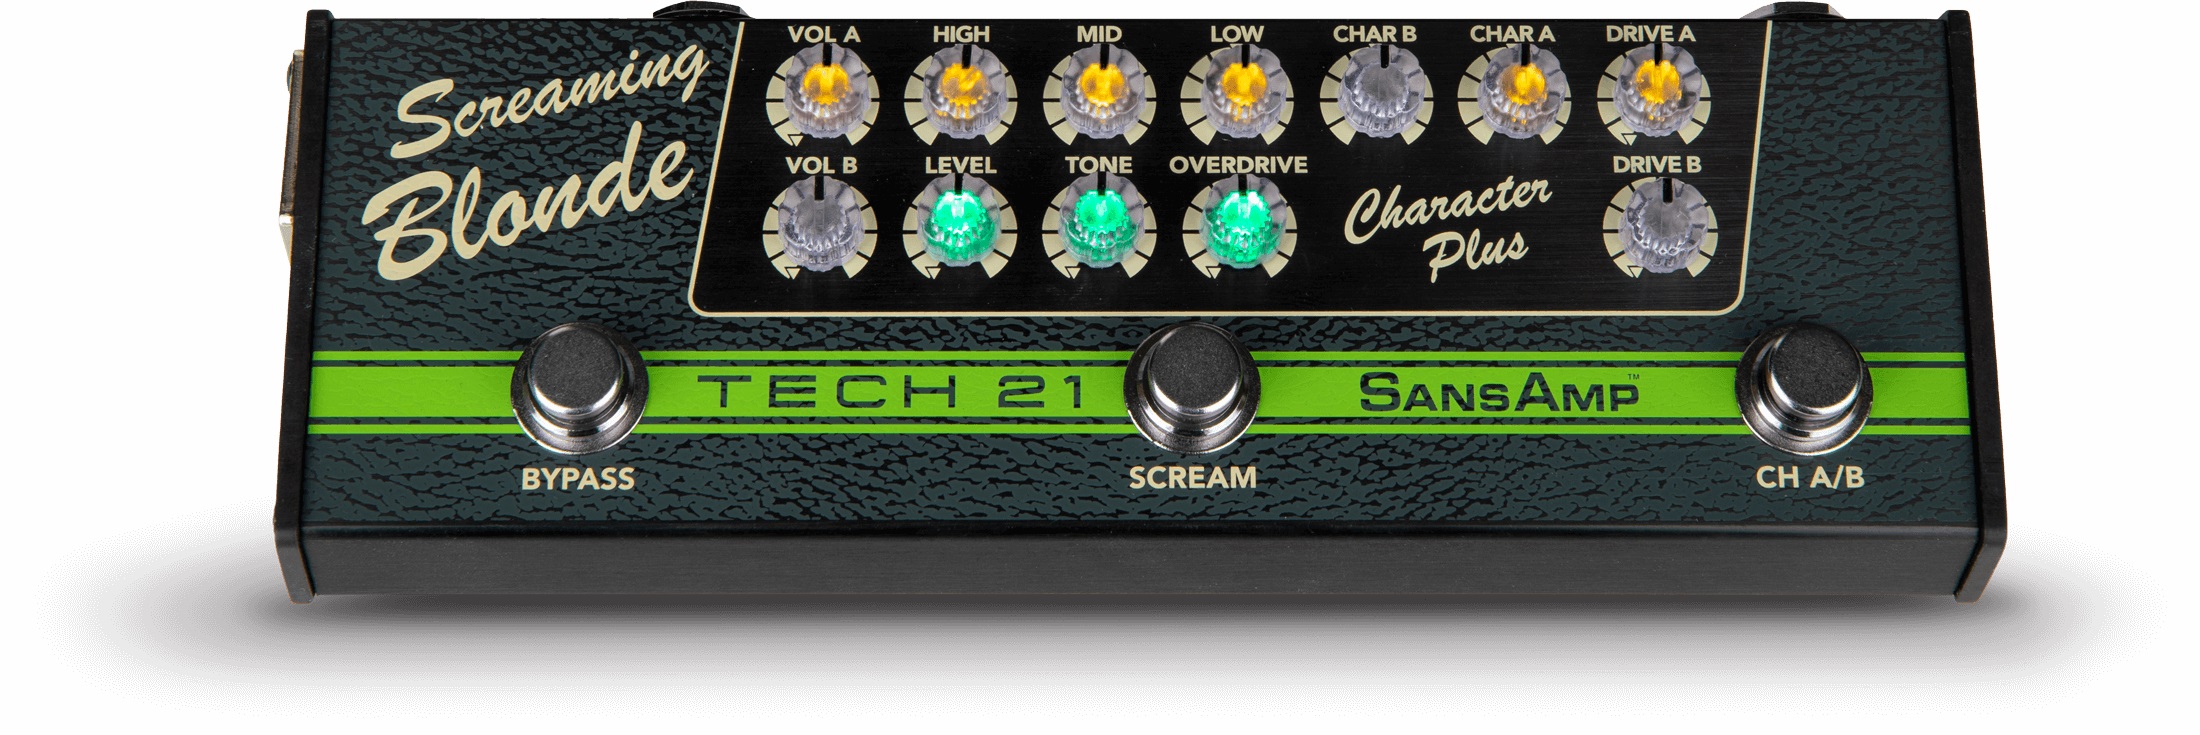 Tech 21 Screaming Blonde Character Series - Guitar amp modeling simulation - Variation 1